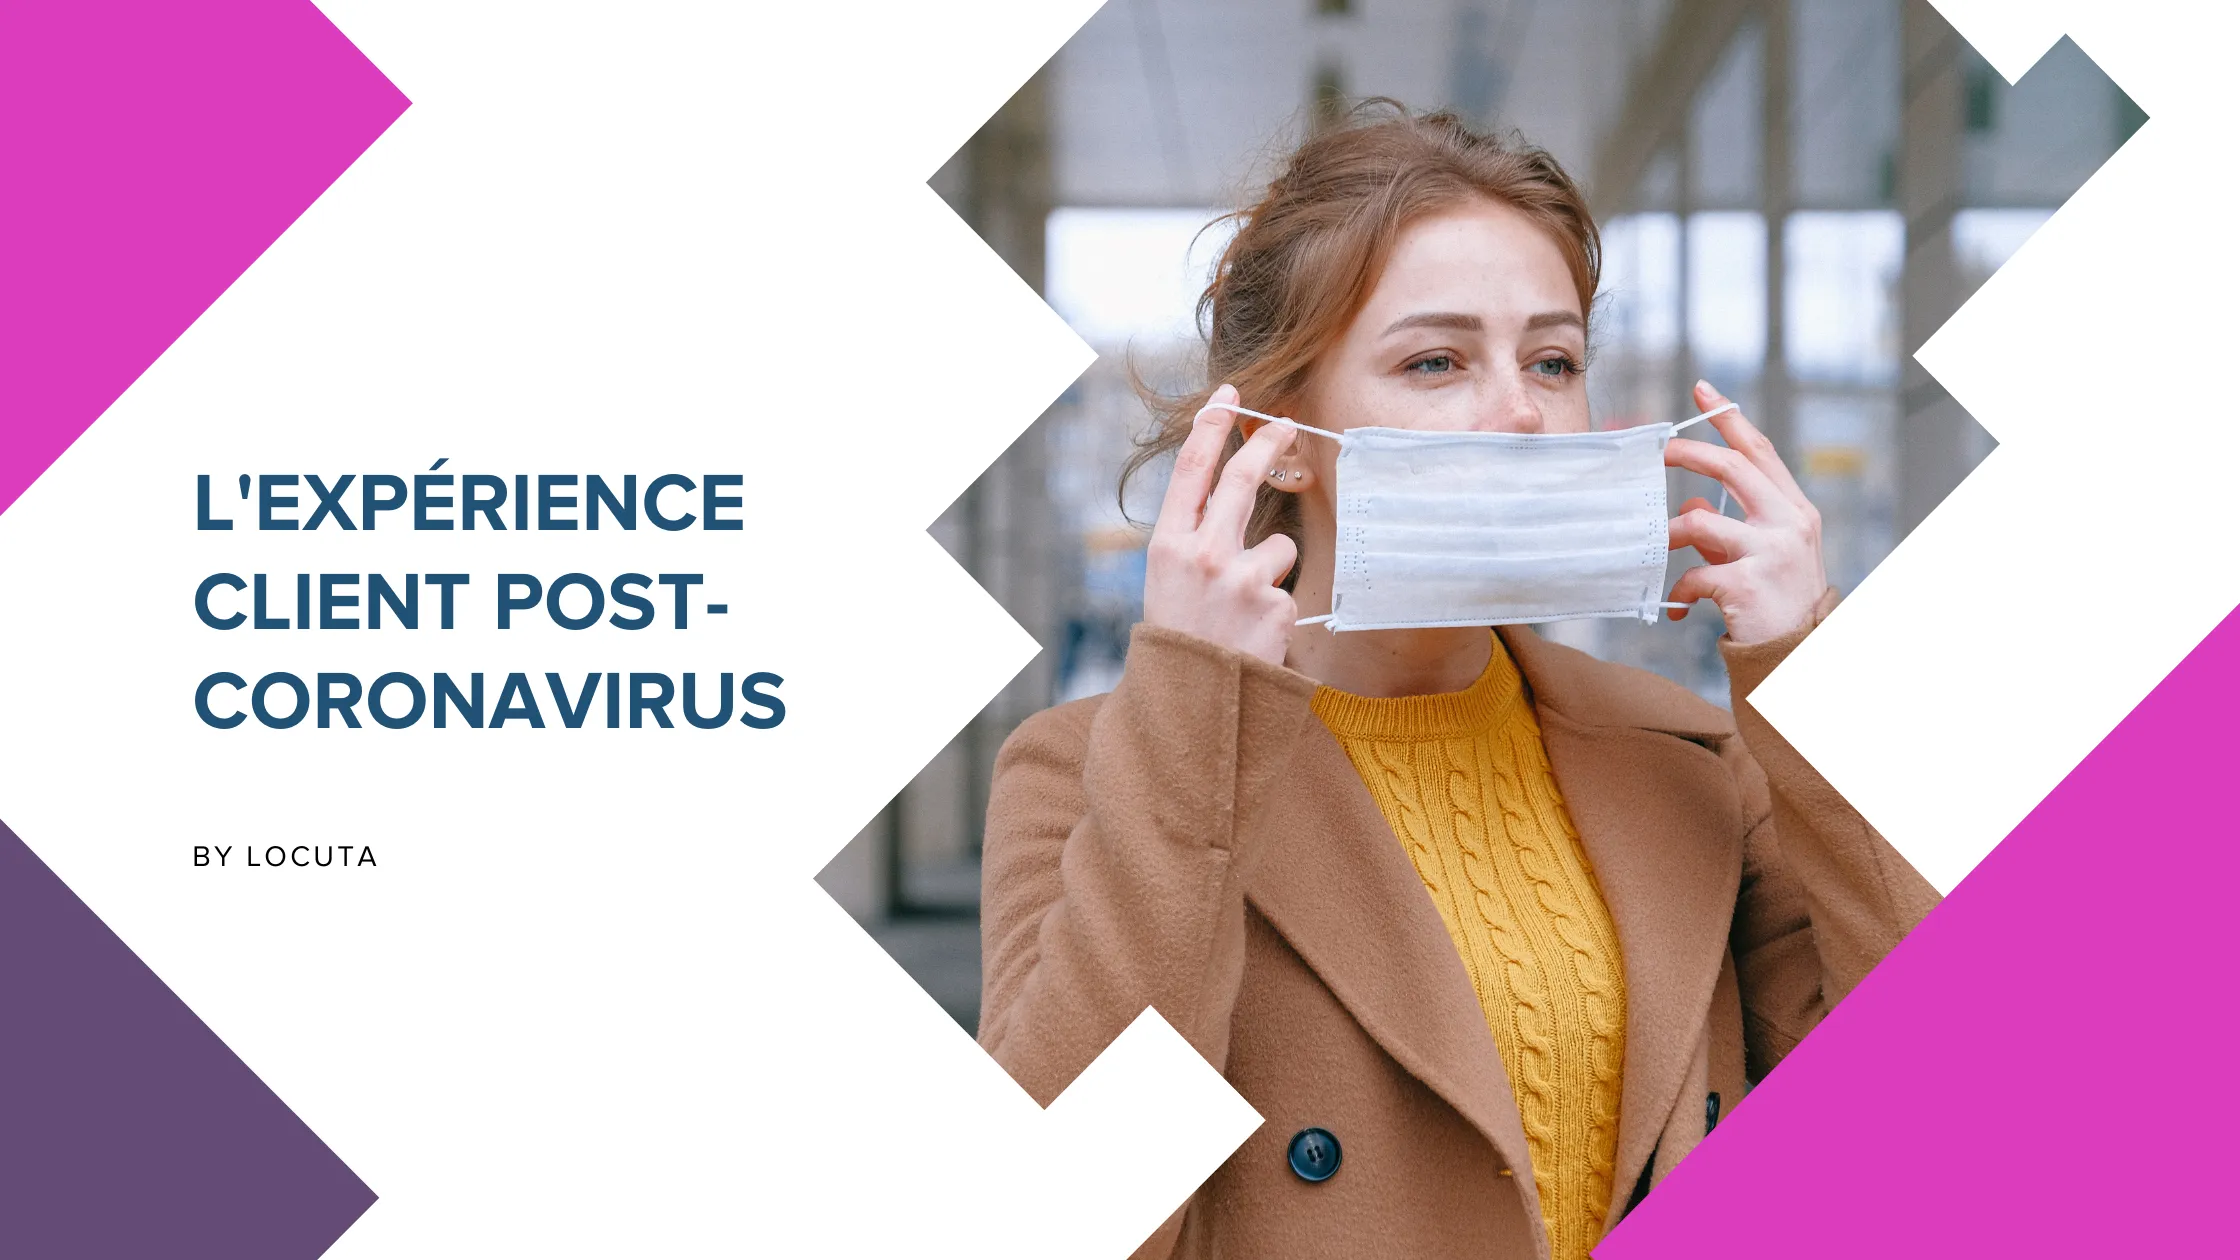 The post-coronavirus customer experience: What will it look like?